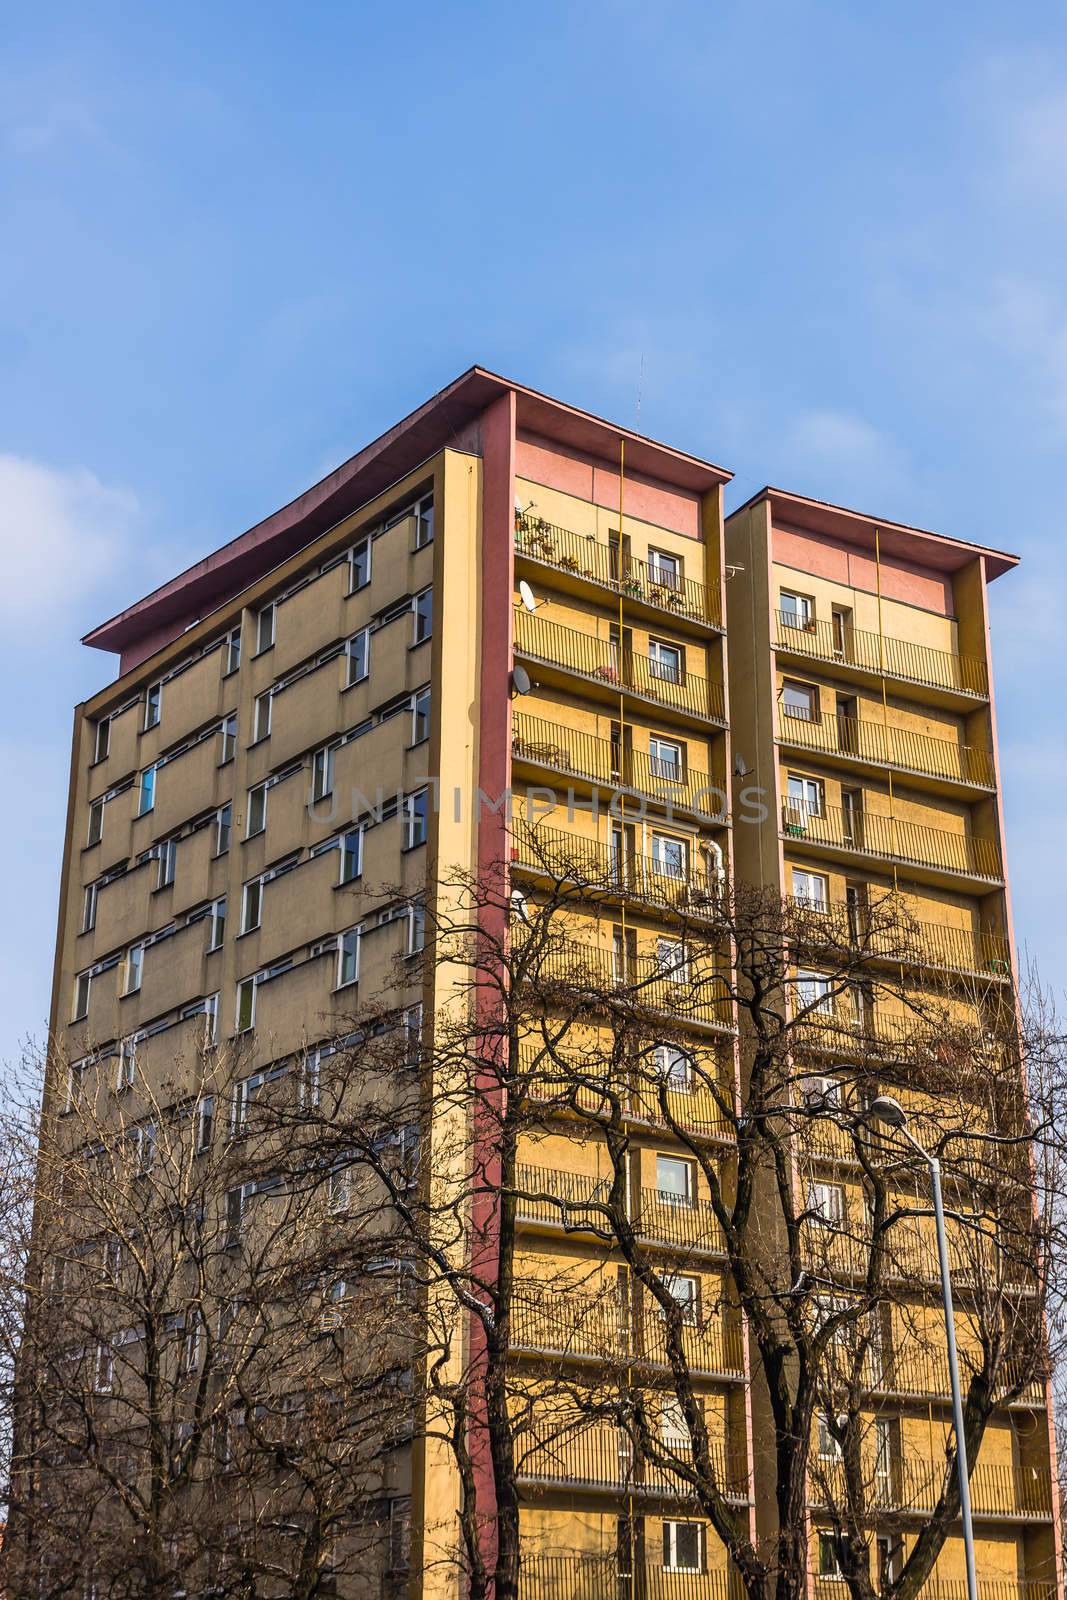 Ordinary residential block in Katowice, Silesia region, Poland.